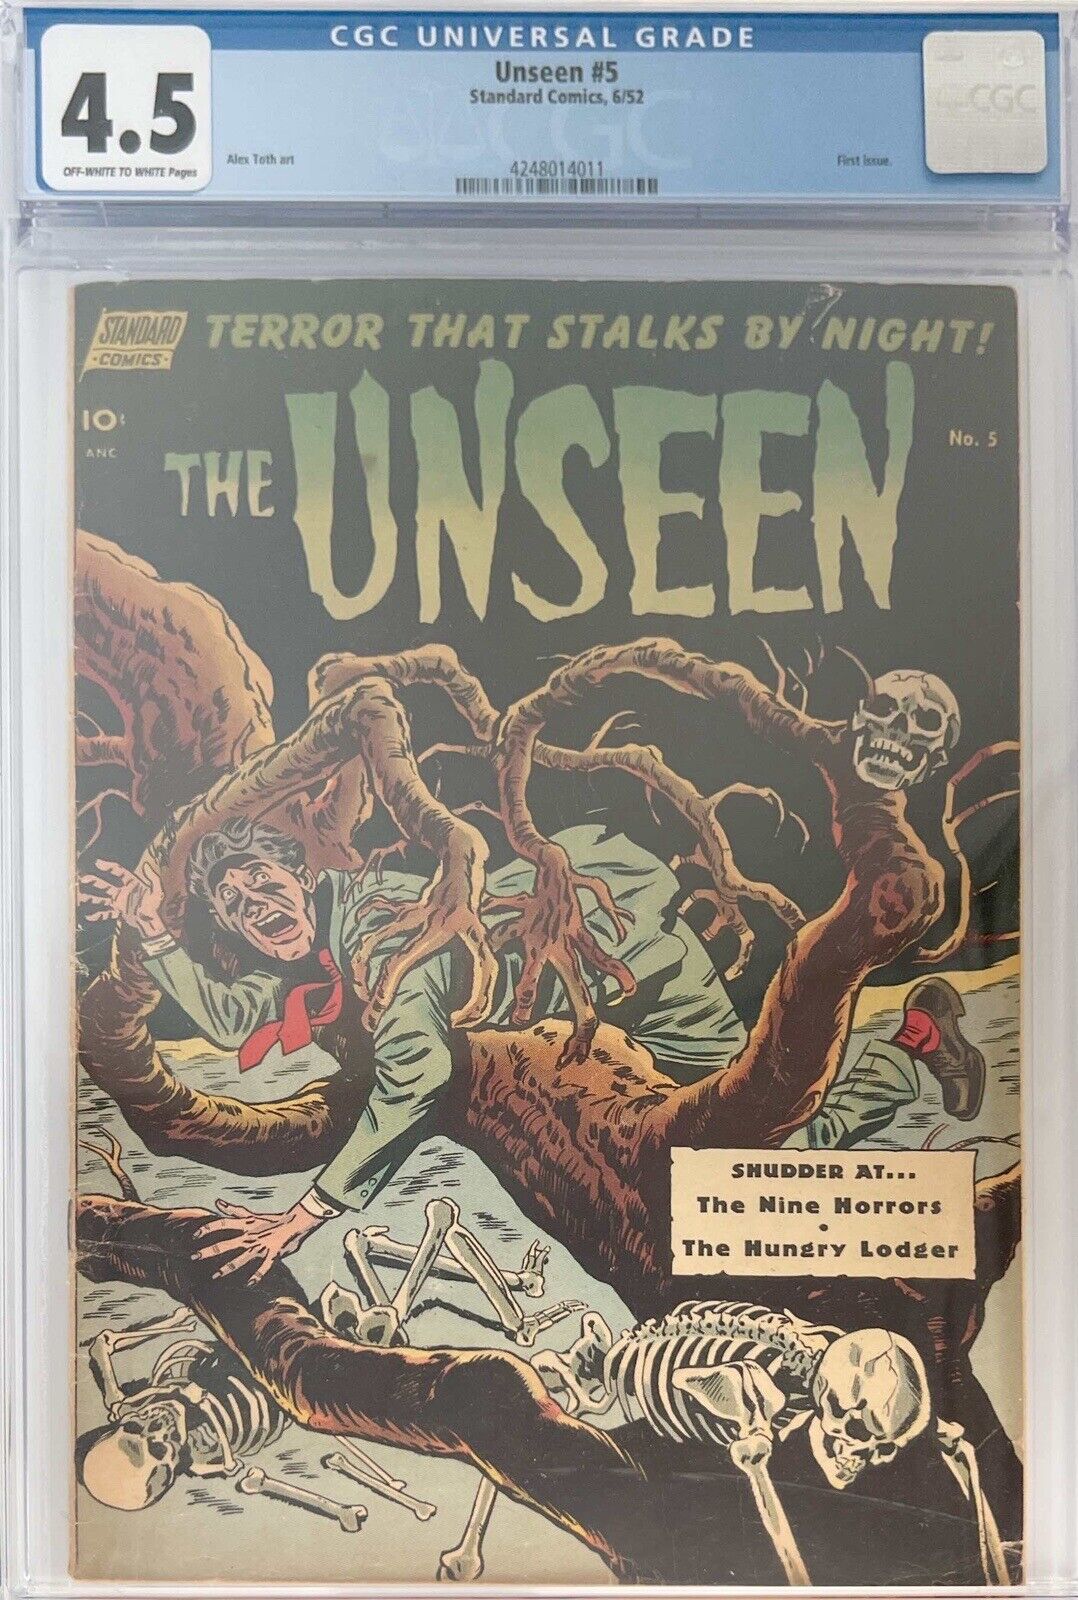 The Unseen 5 (VG+ 4.5) Standard Comics 1952 Golden Terror That Stalks by Night